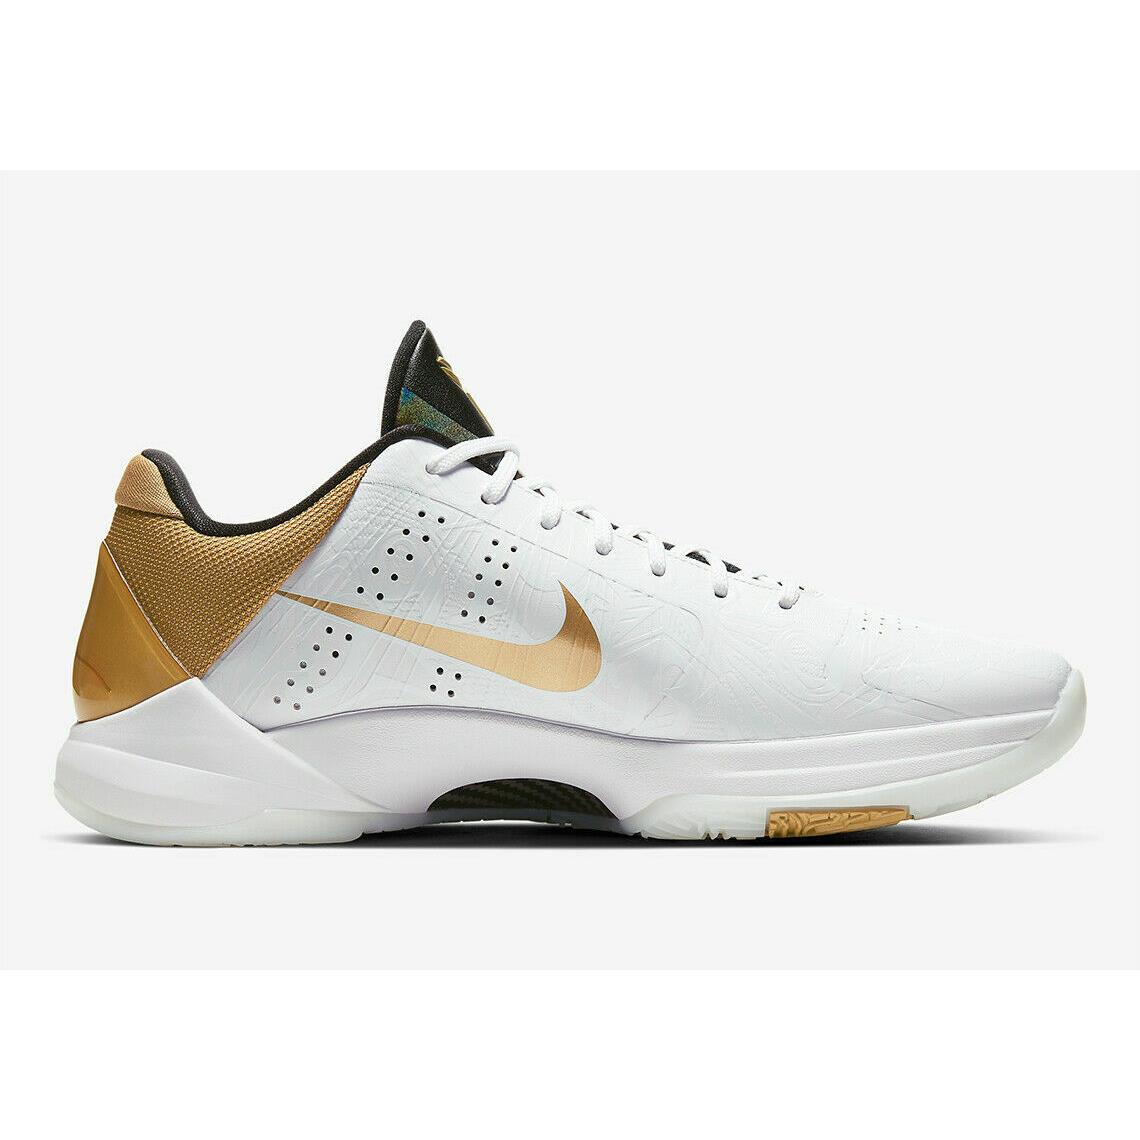 Nike shoes Kobe Protro - White , Black Gold Manufacturer 1